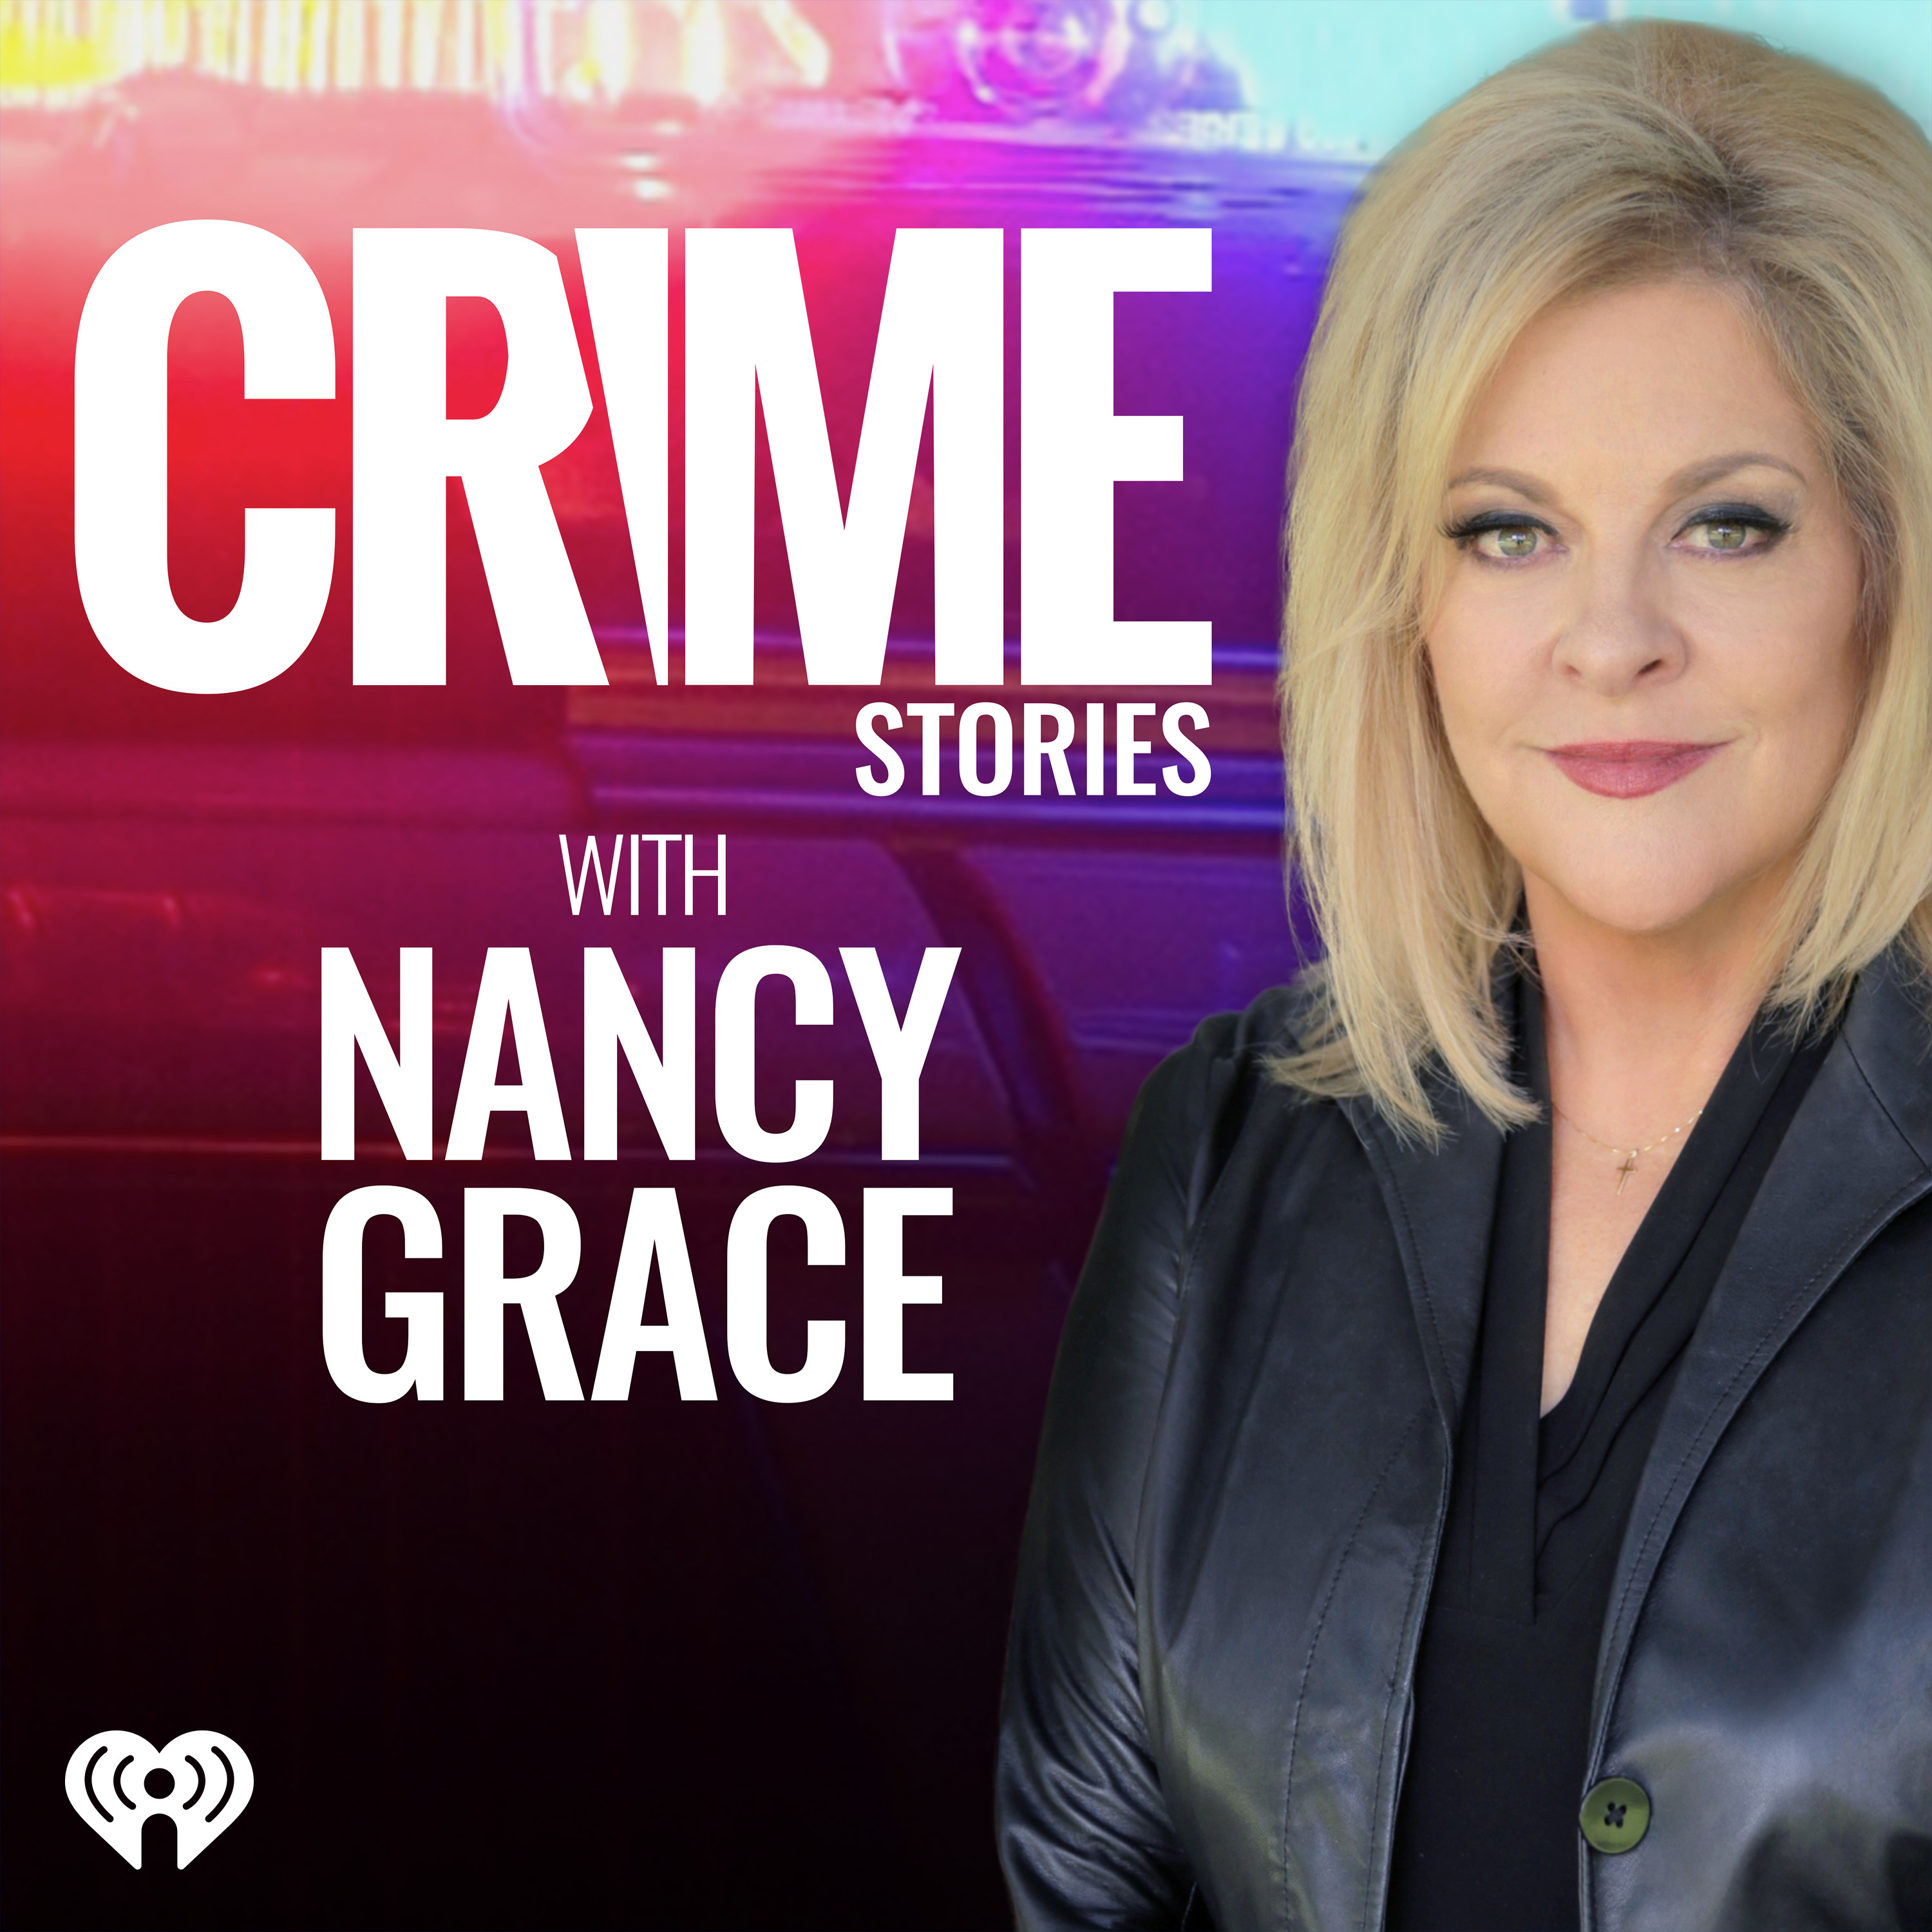 About Nancy Grace 